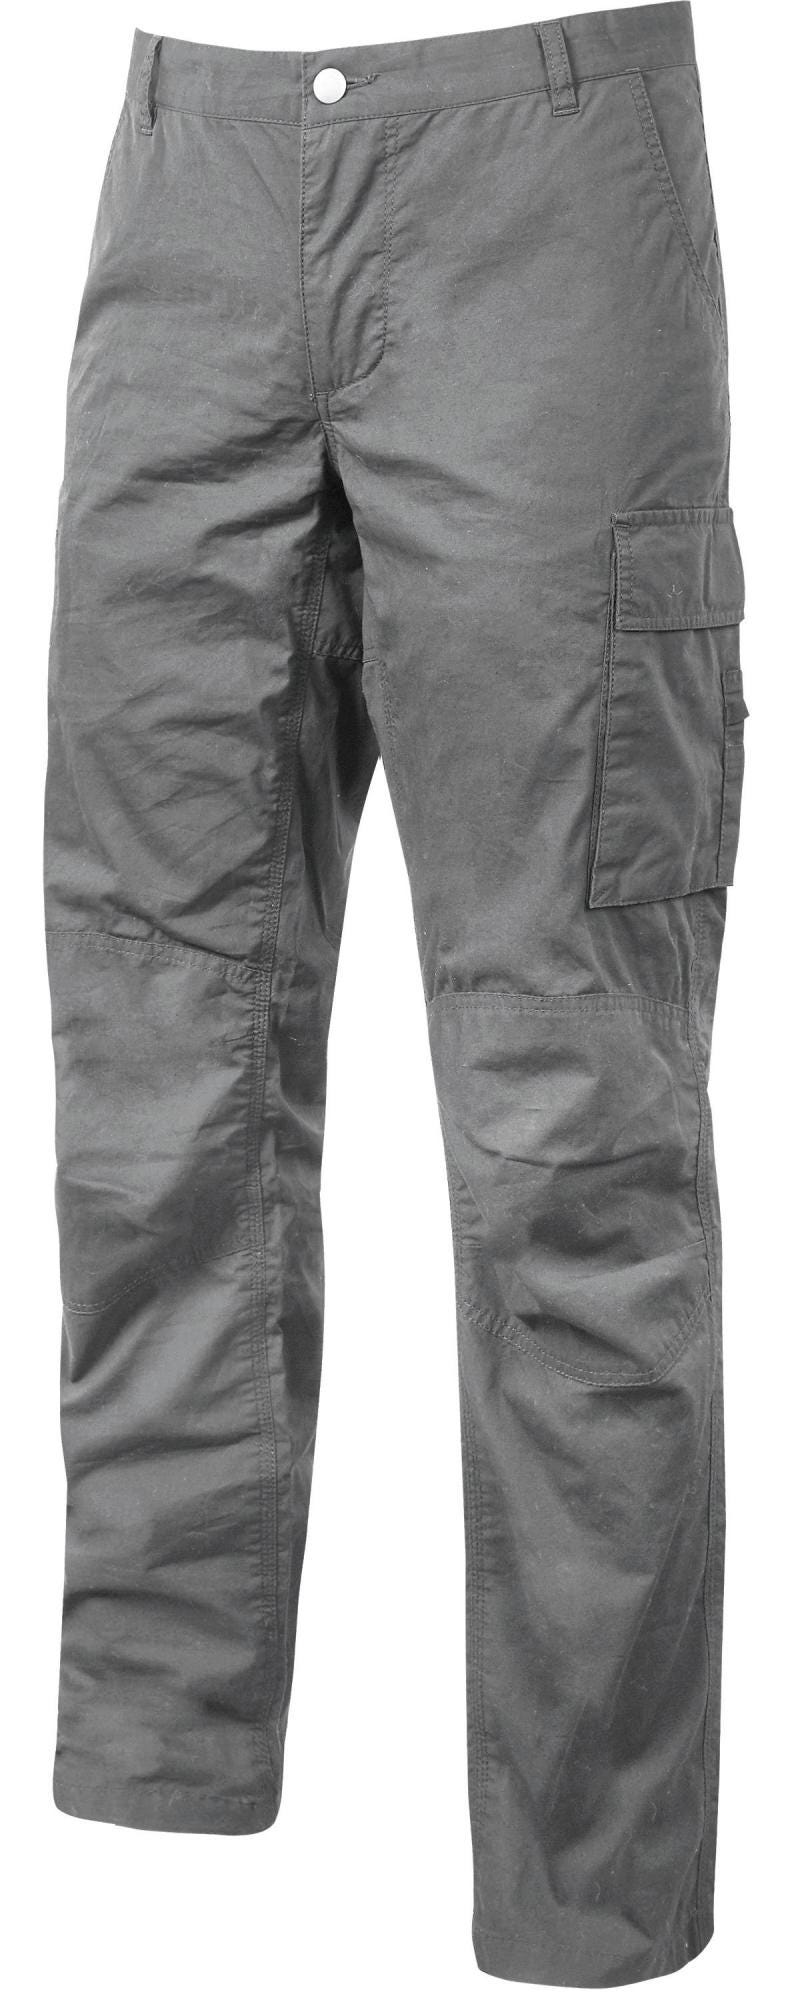 Pantalone da lavoro U-POWER Ocean grigio tg. L